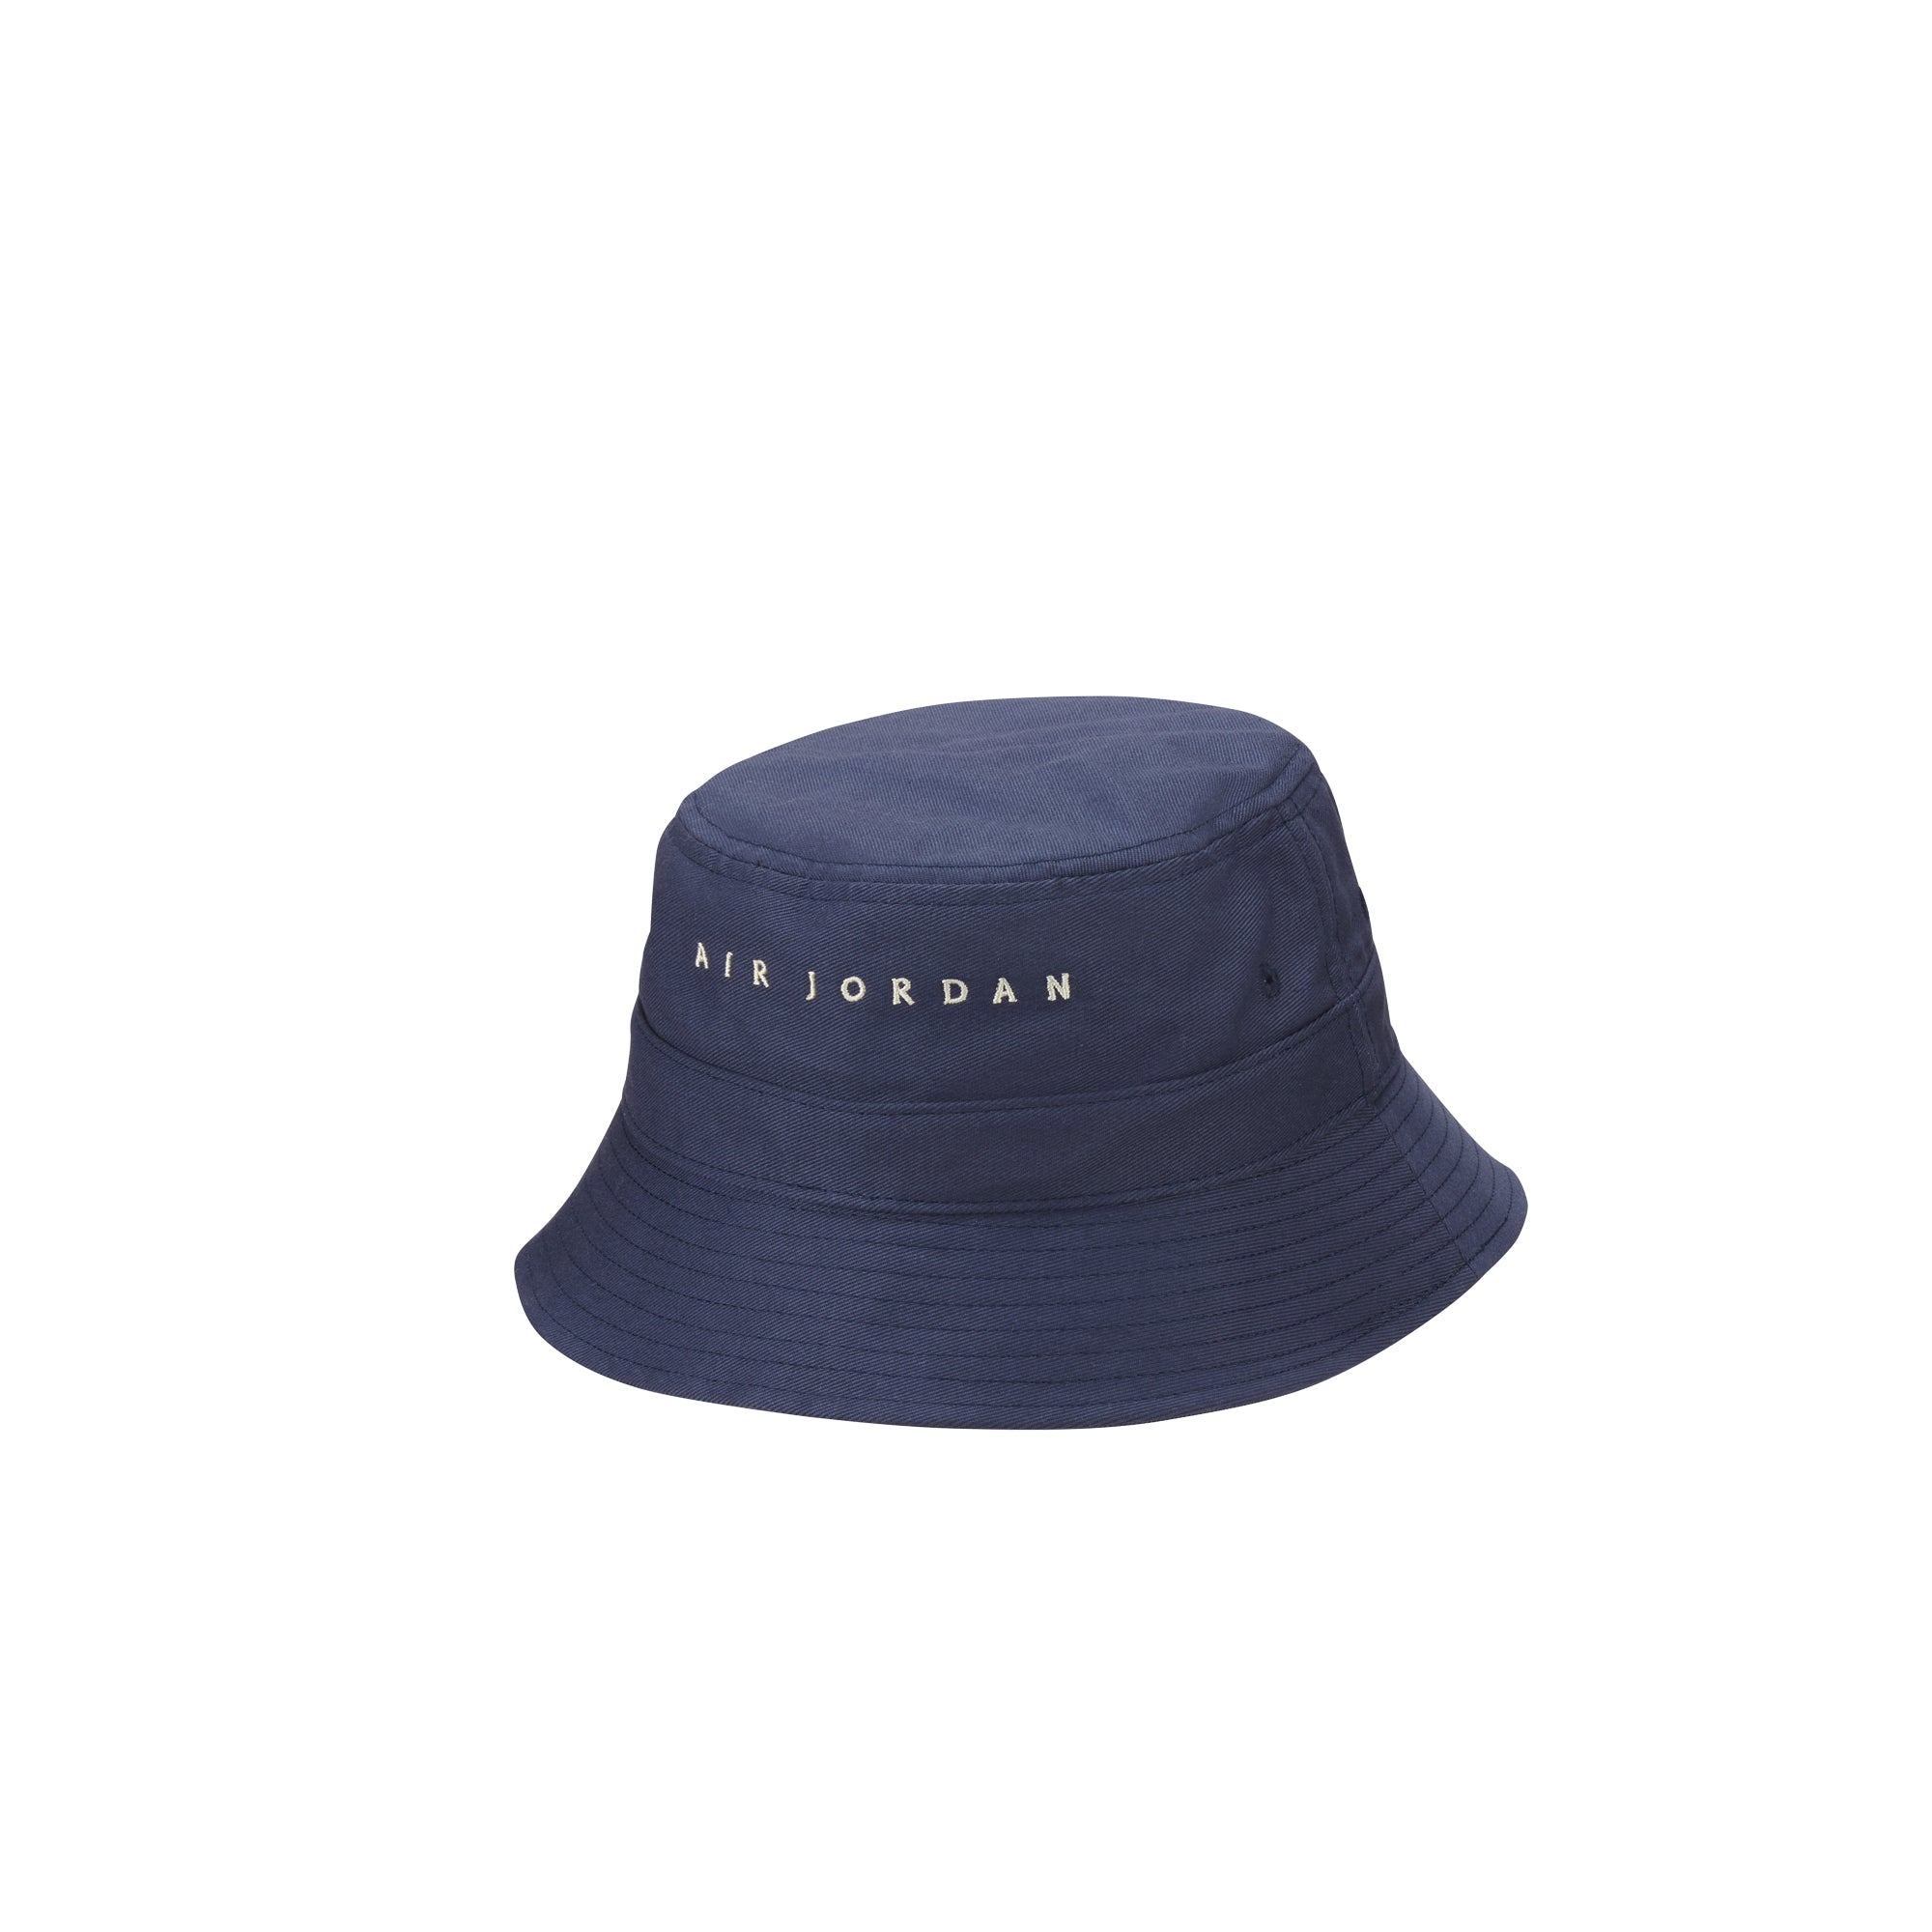 Air Jordan x Union Bucket Hat - S/M